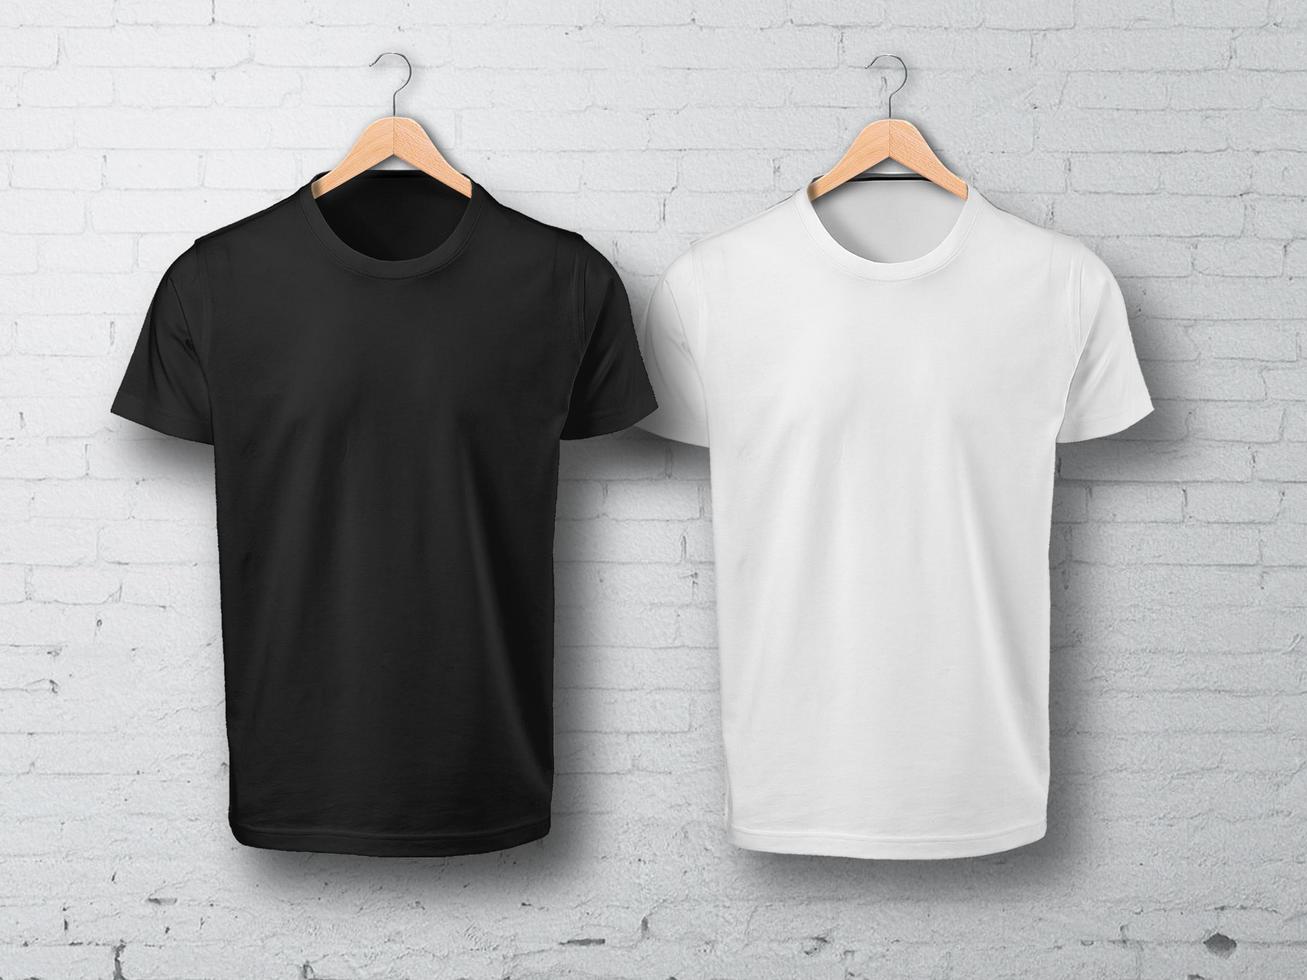 maquete de camiseta preta e branca foto